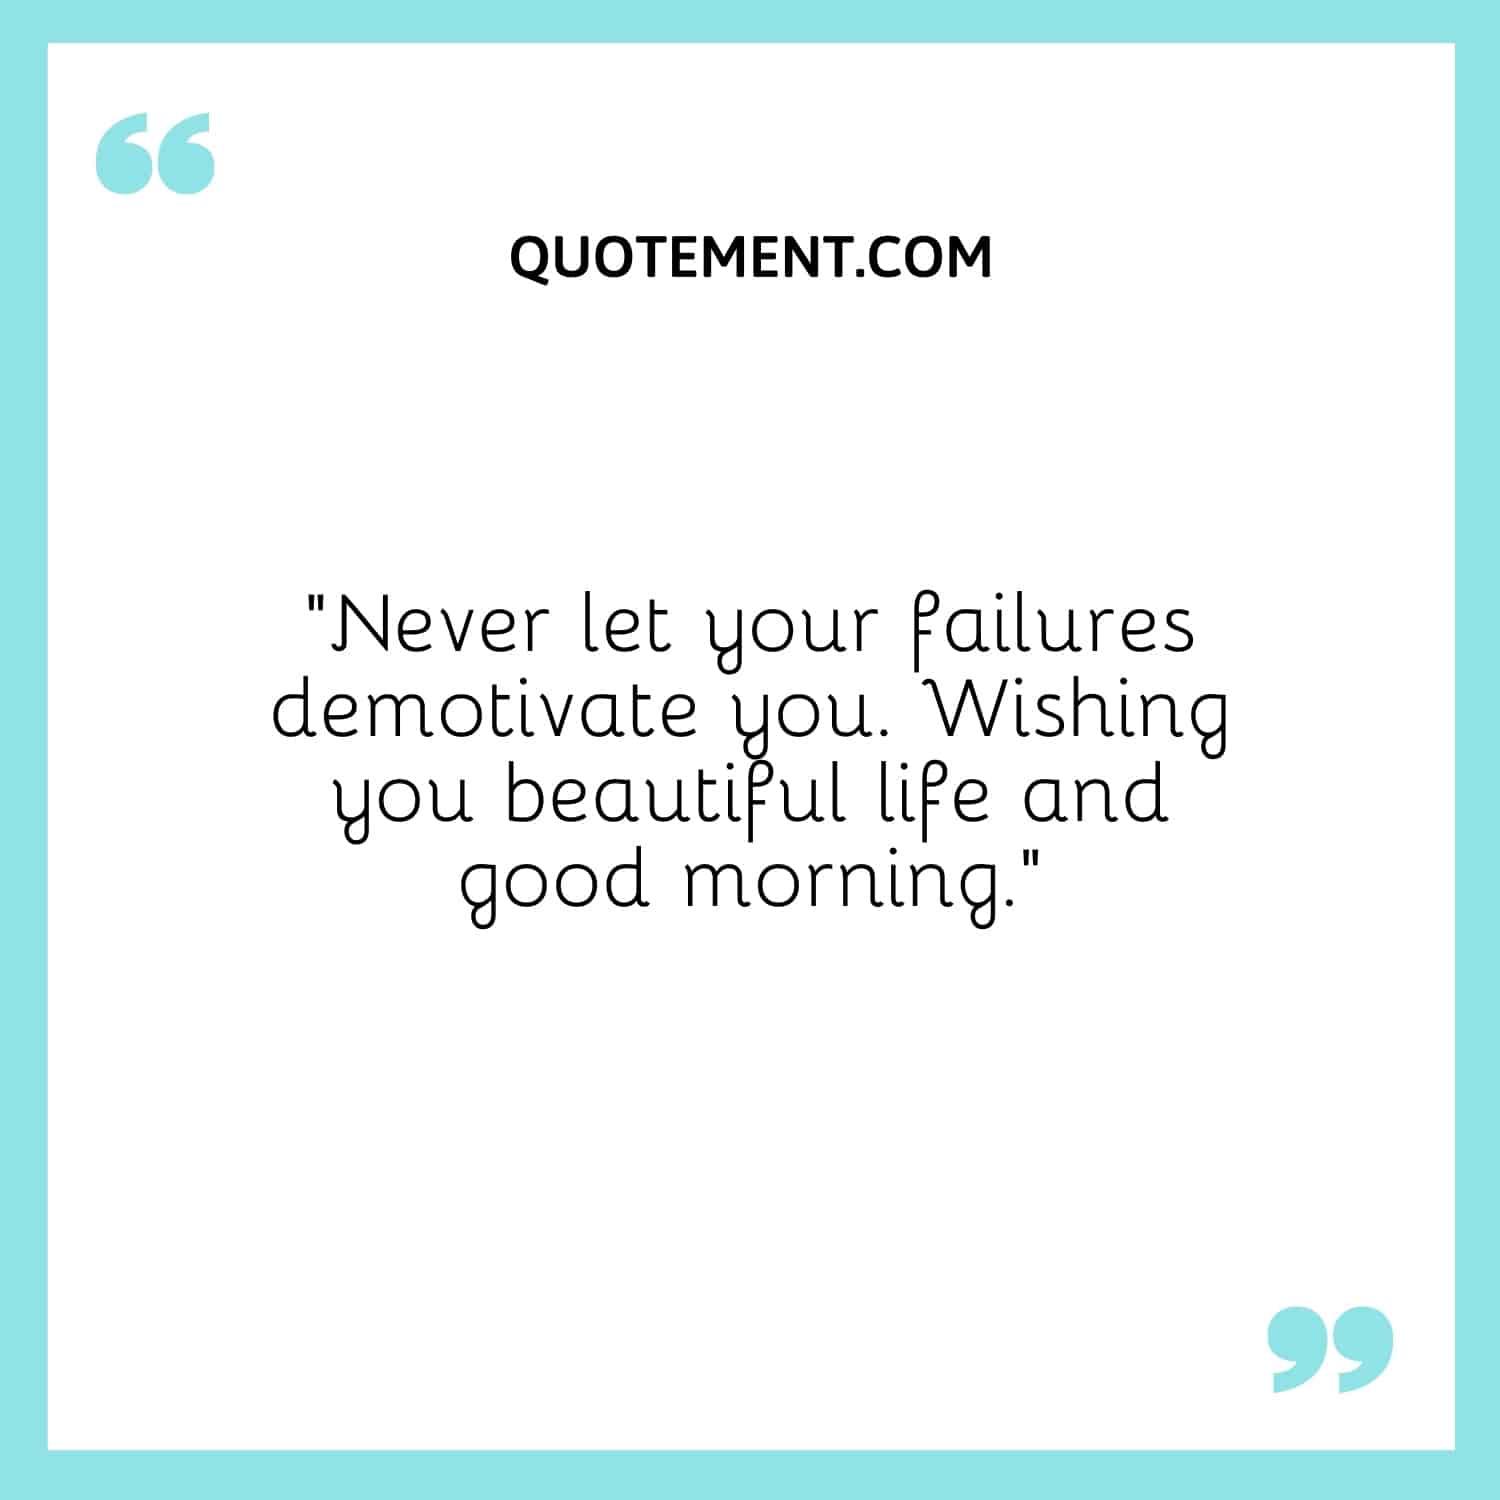 Never let your failures demotivate you